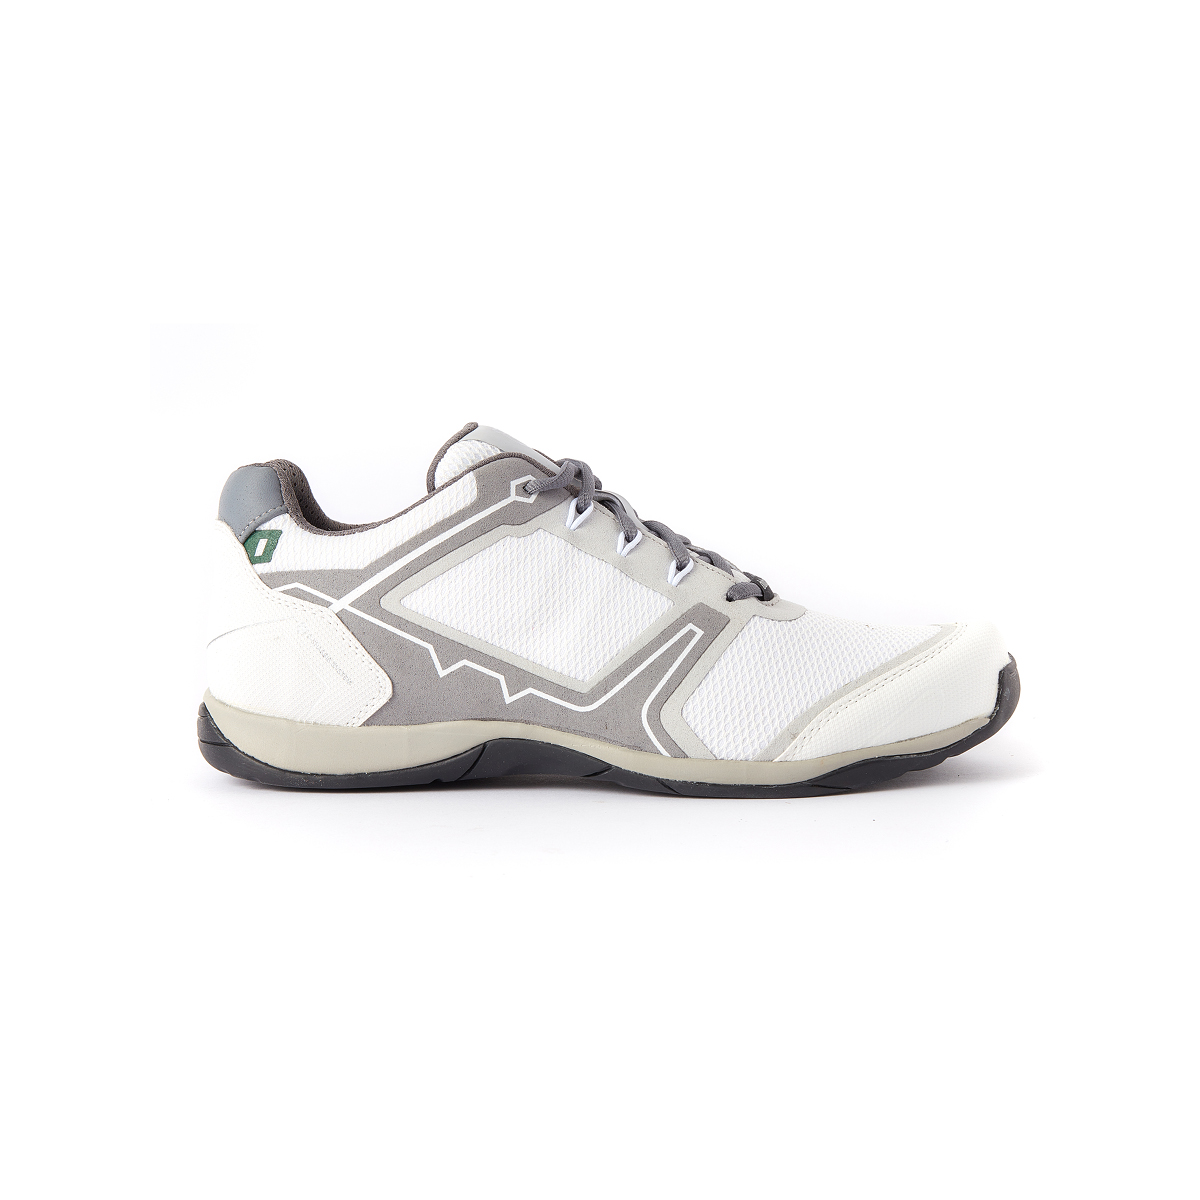 Dubarry Skerries chaussures de voile unisexe blanc, taille 42